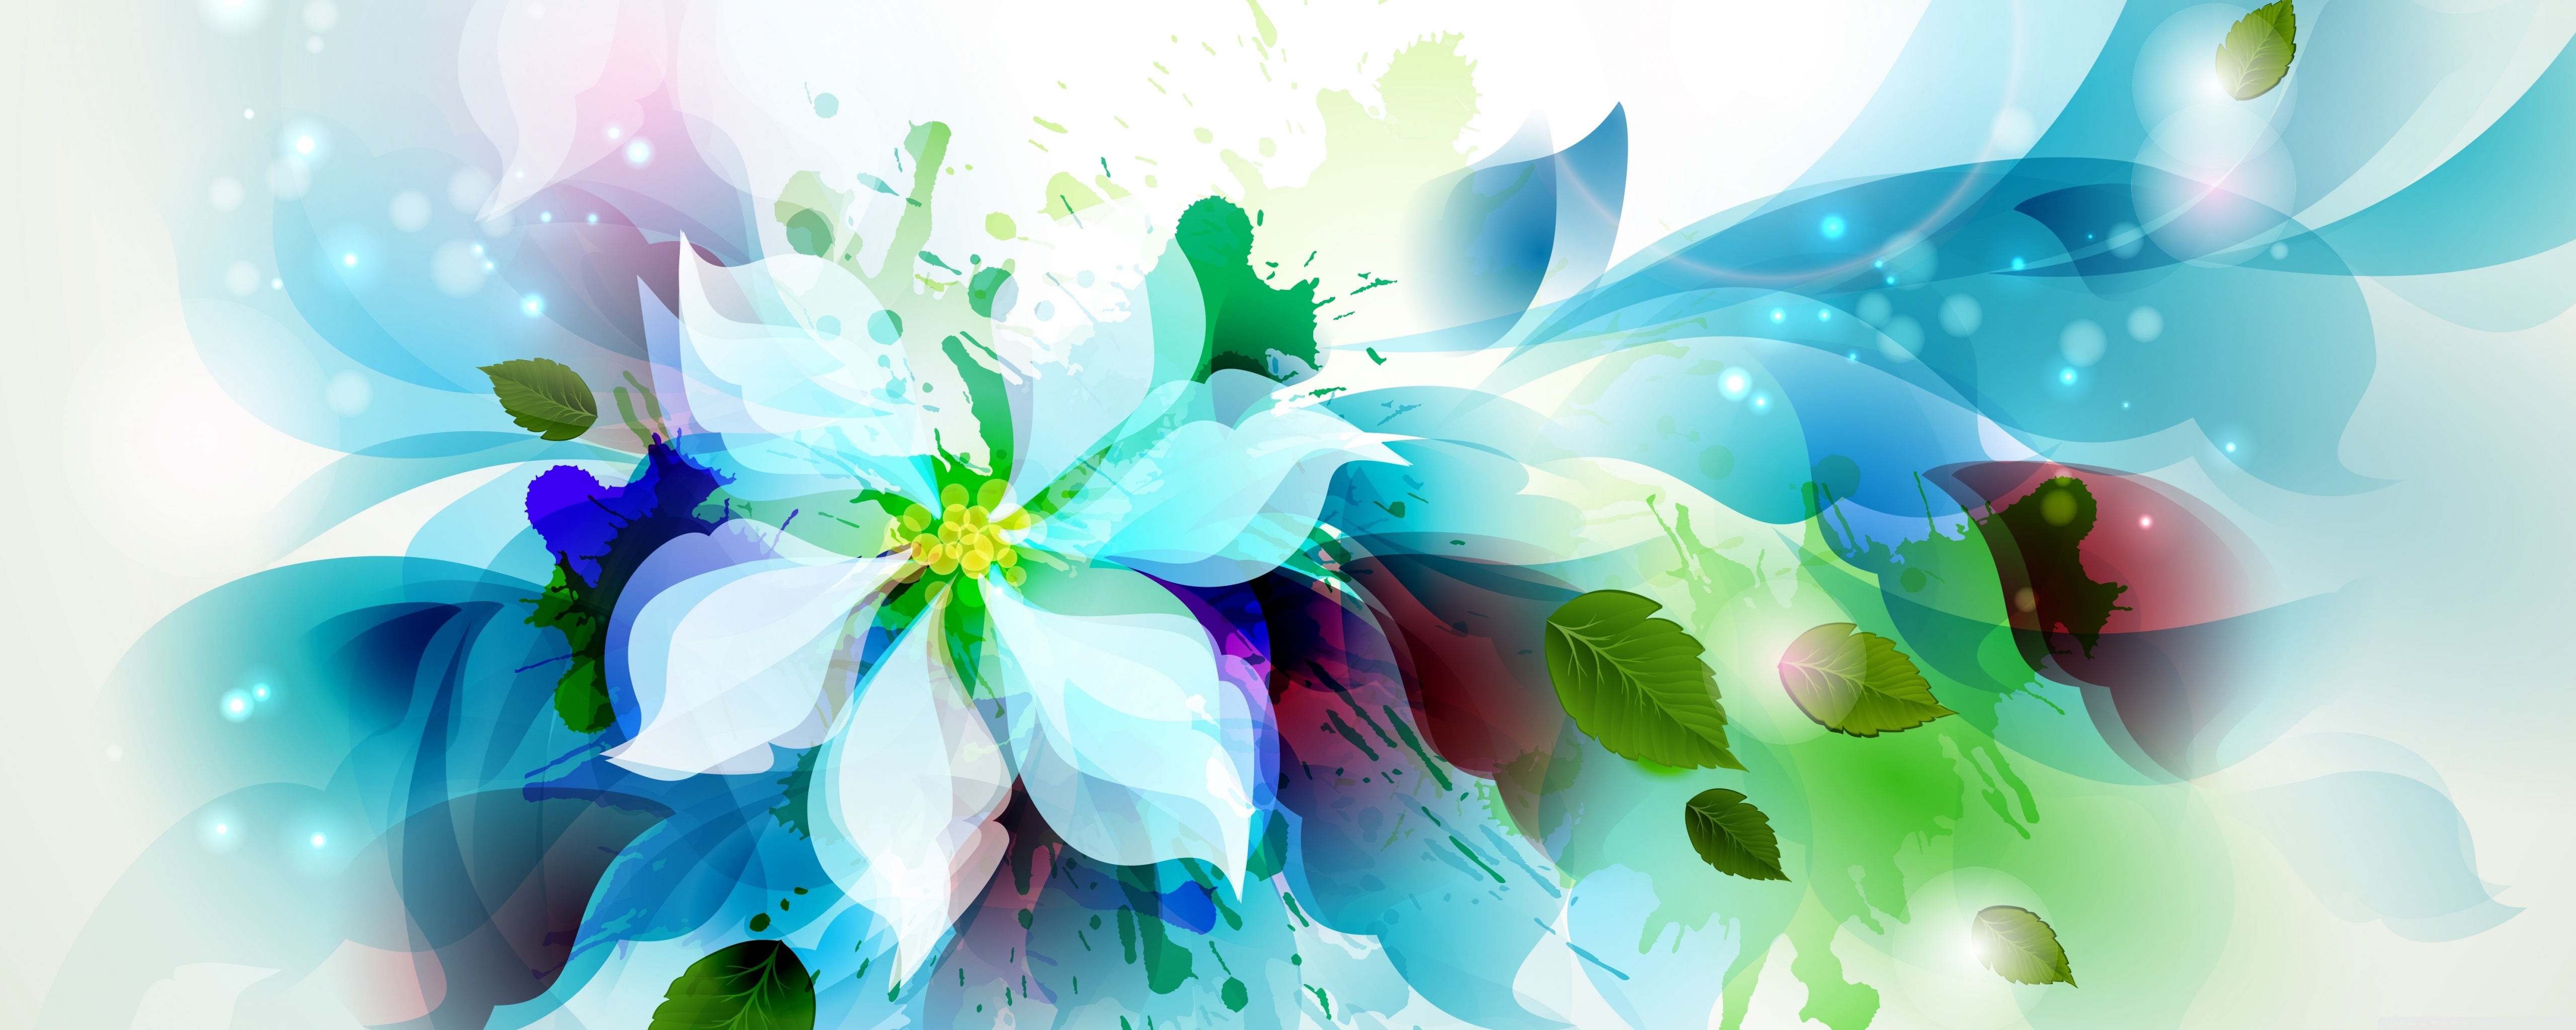 Abstract Flower Ultra Hd Desktop Background Wallpaper For 4k Uhd